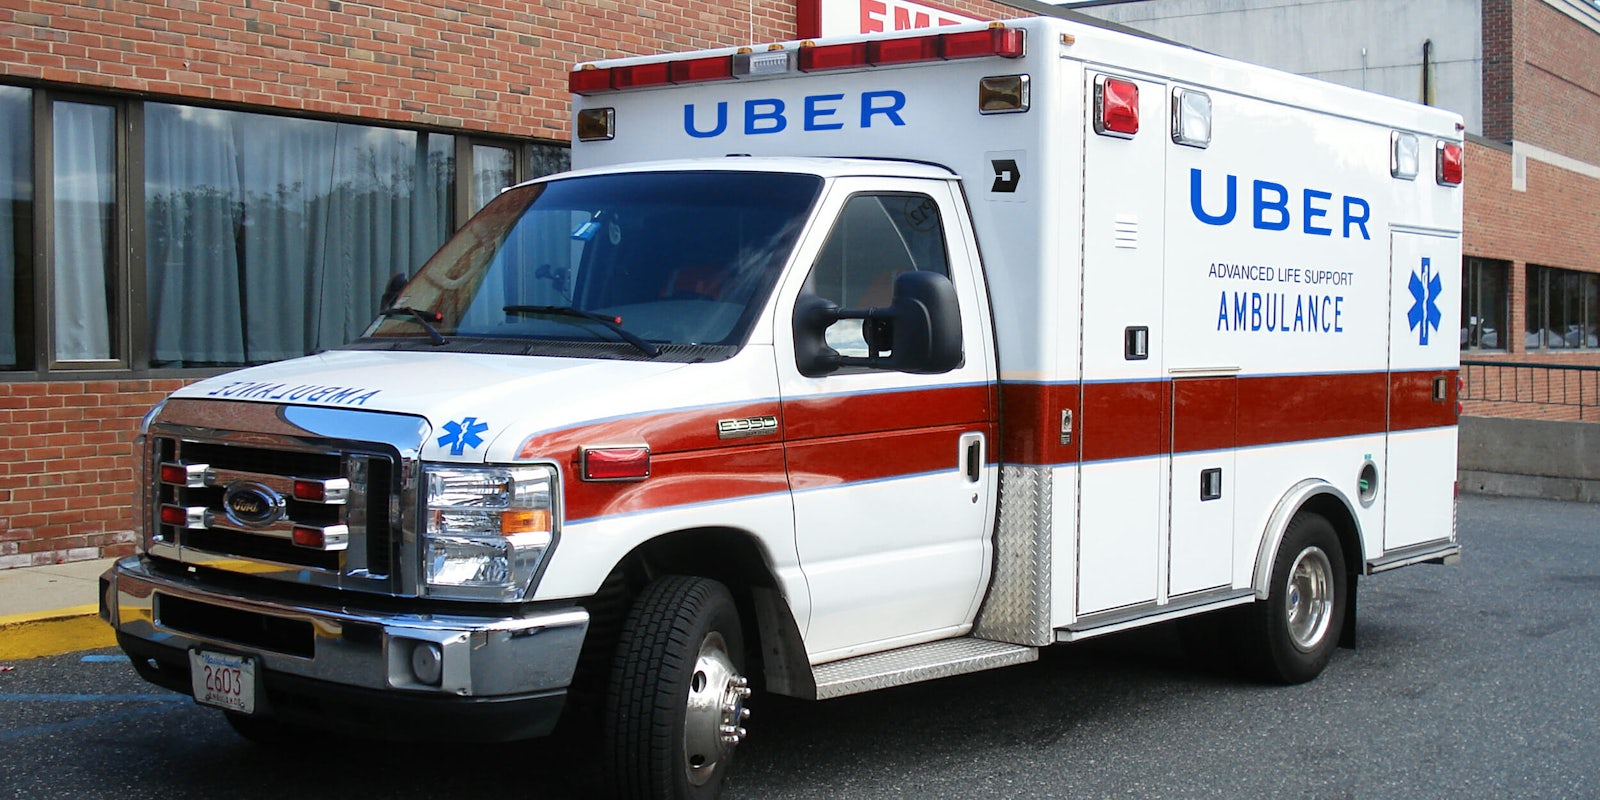 Ambulance with Uber markings